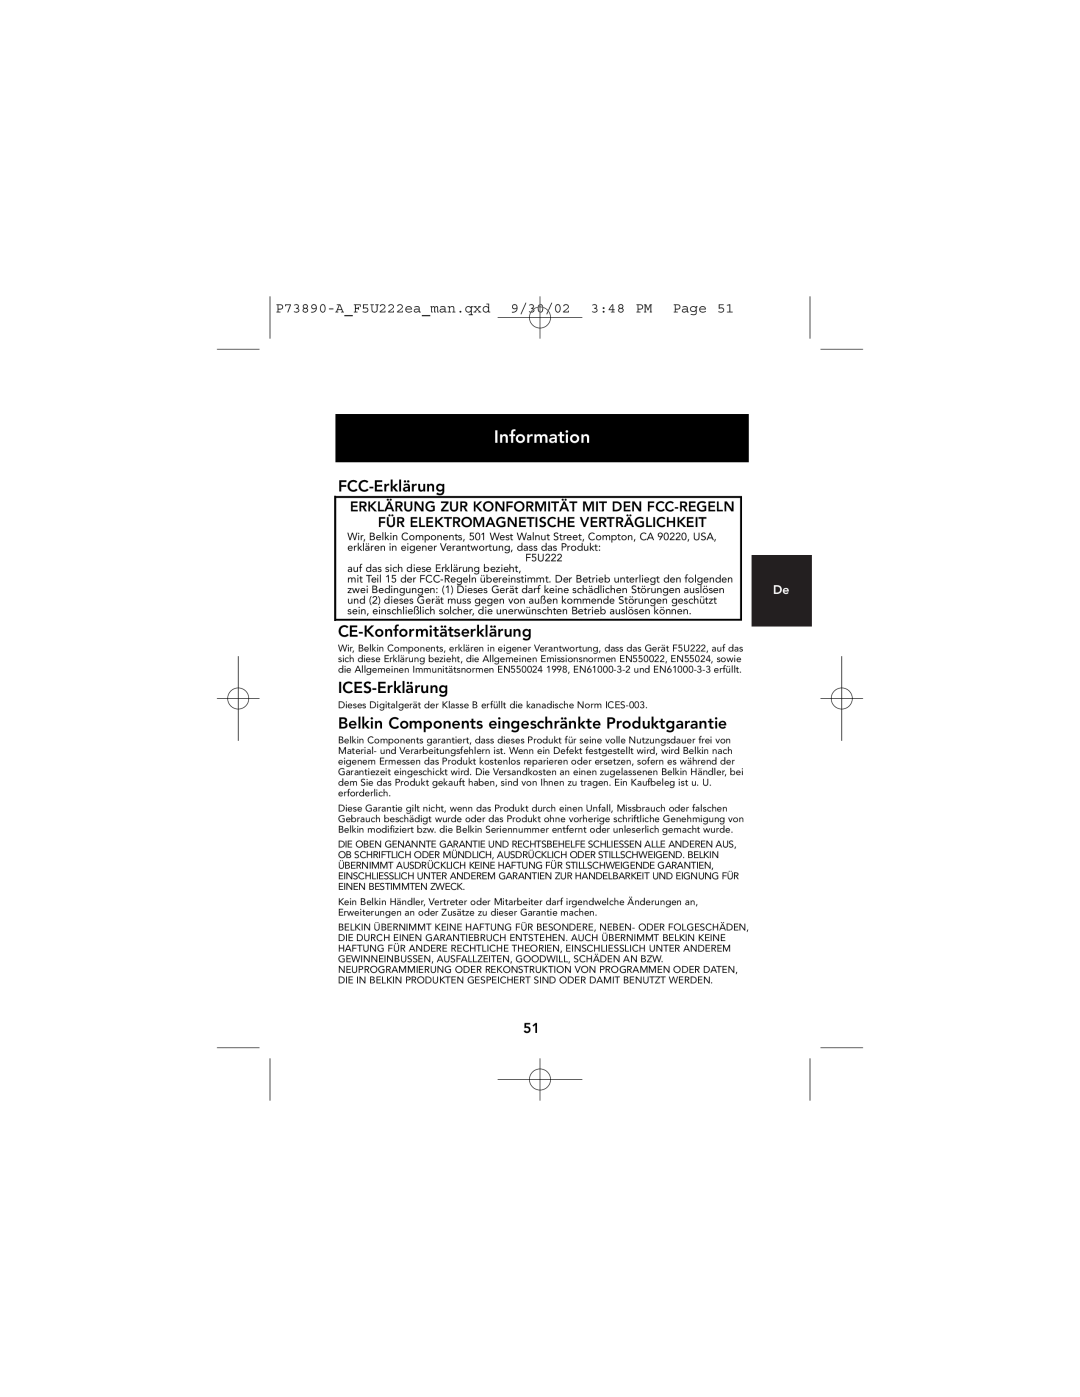 Belkin P73890EA-A manual FCC-Erklärung, CE-Konformitätserklärung, ICES-Erklärung, Information 